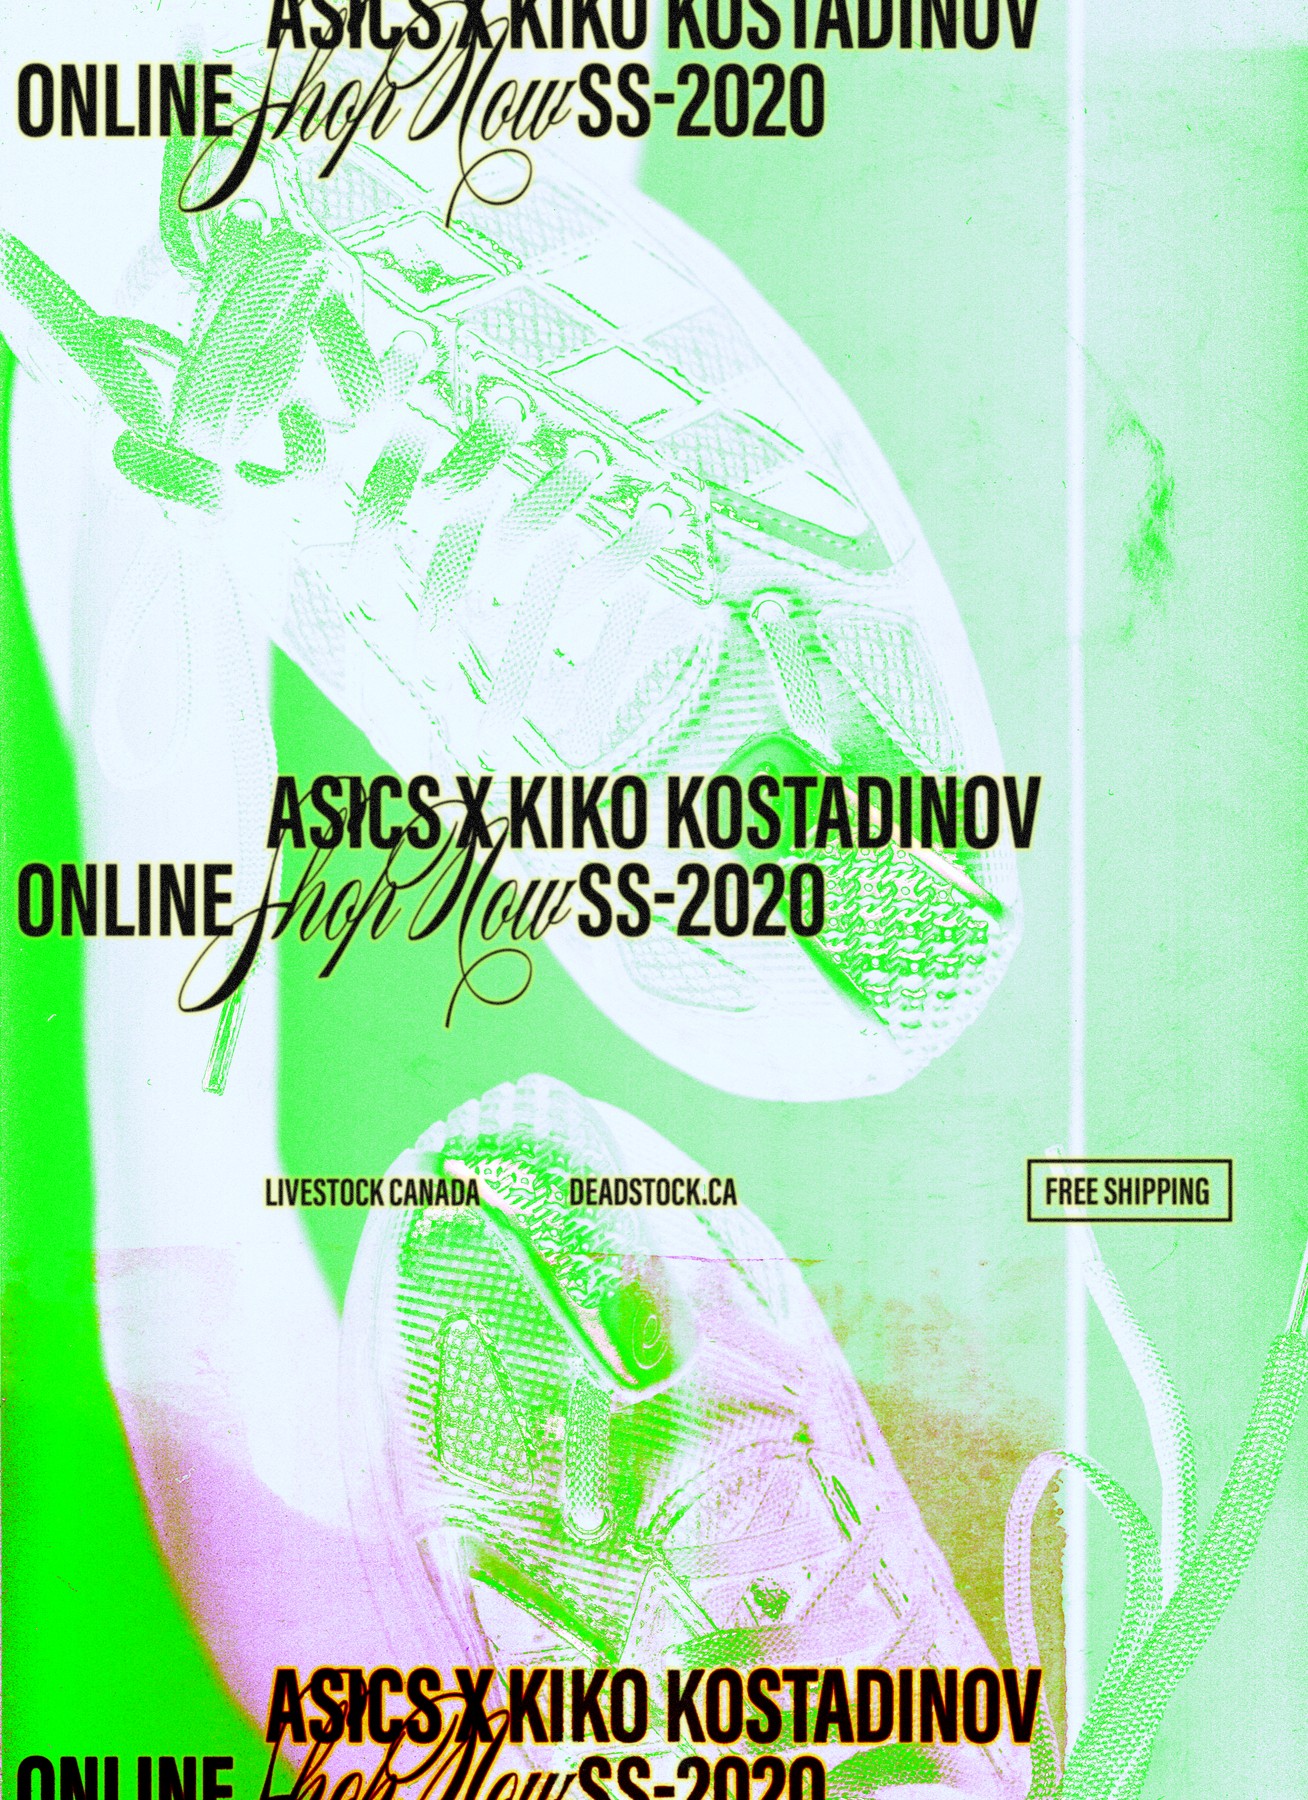 asics-x-kiko-kostadinov-livestock.jpg